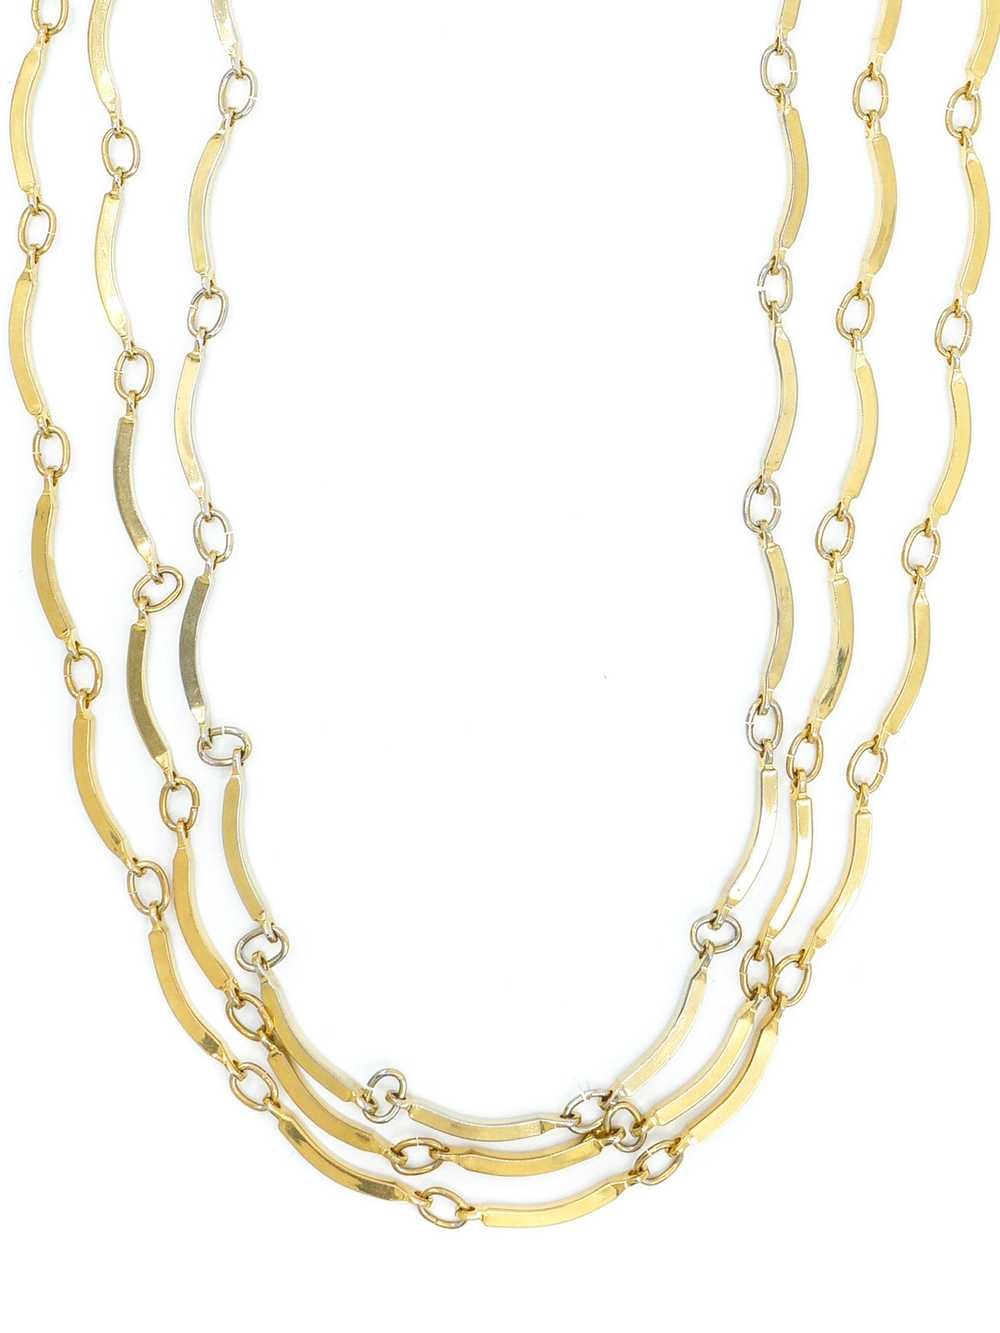 Yves Saint Laurent Three Strand Necklace - image 4